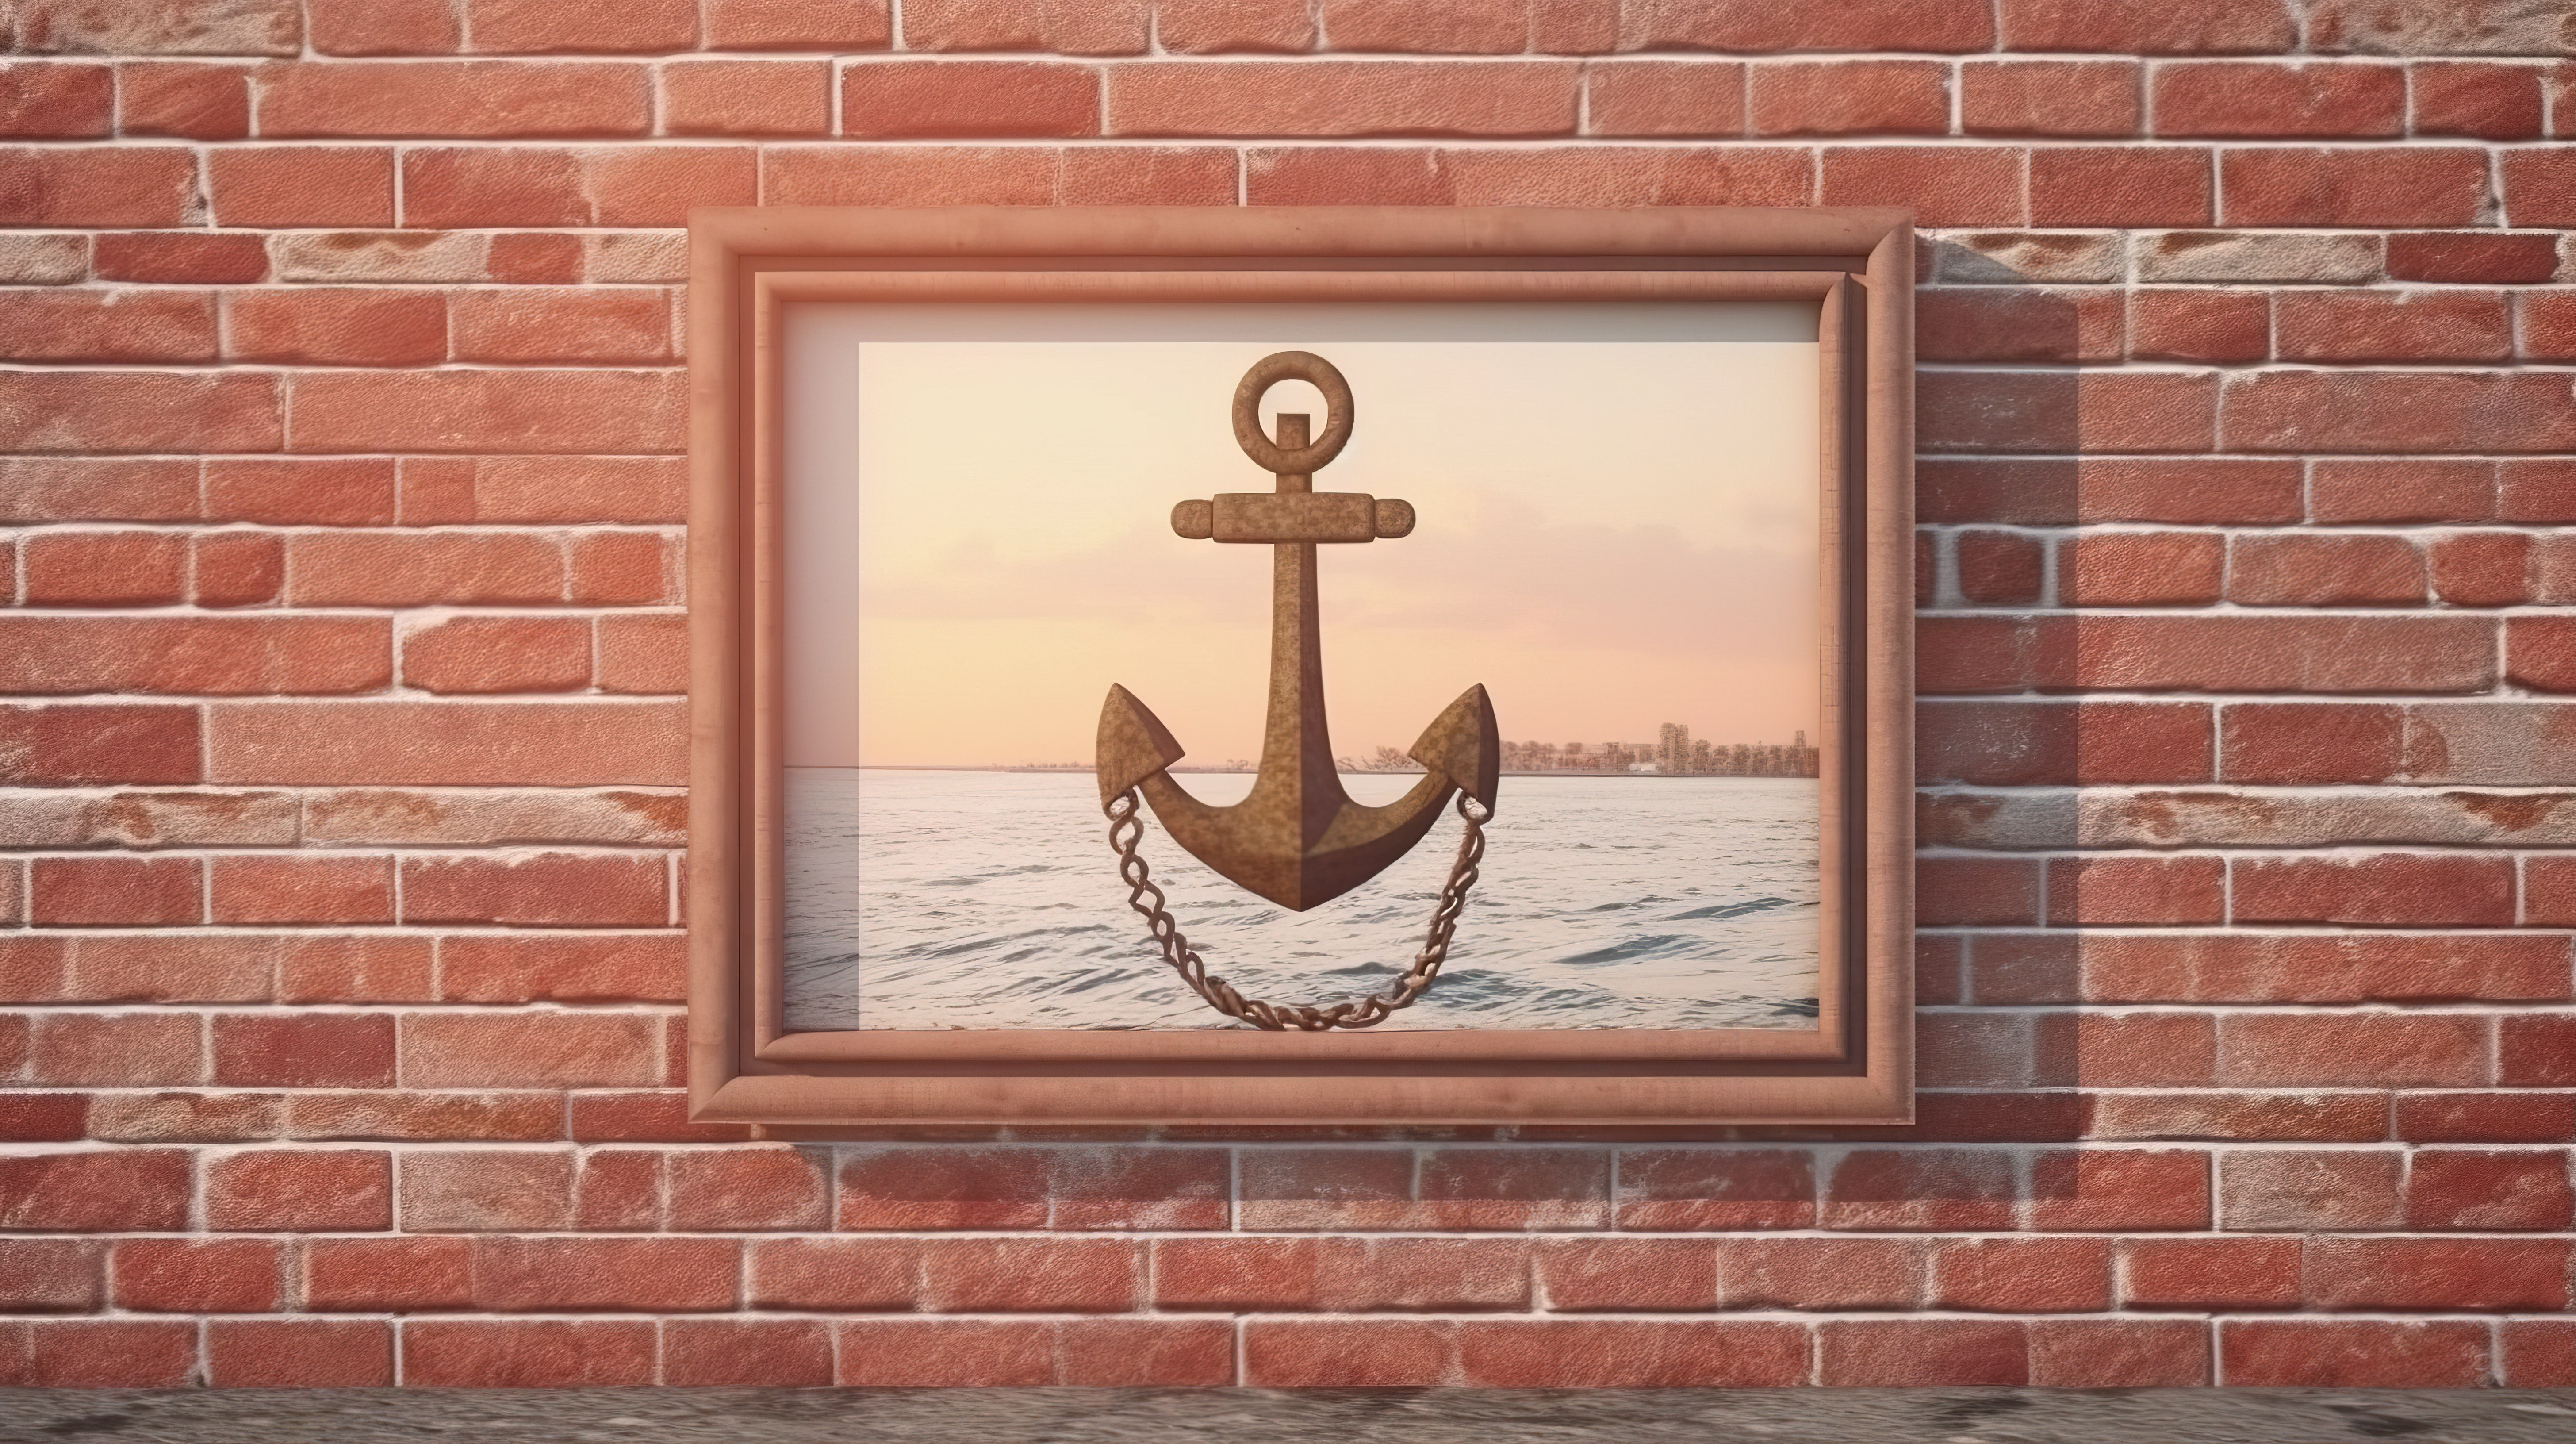 3D 渲染的航海锚靠在带有空白框架的砖墙上的极端特写图片